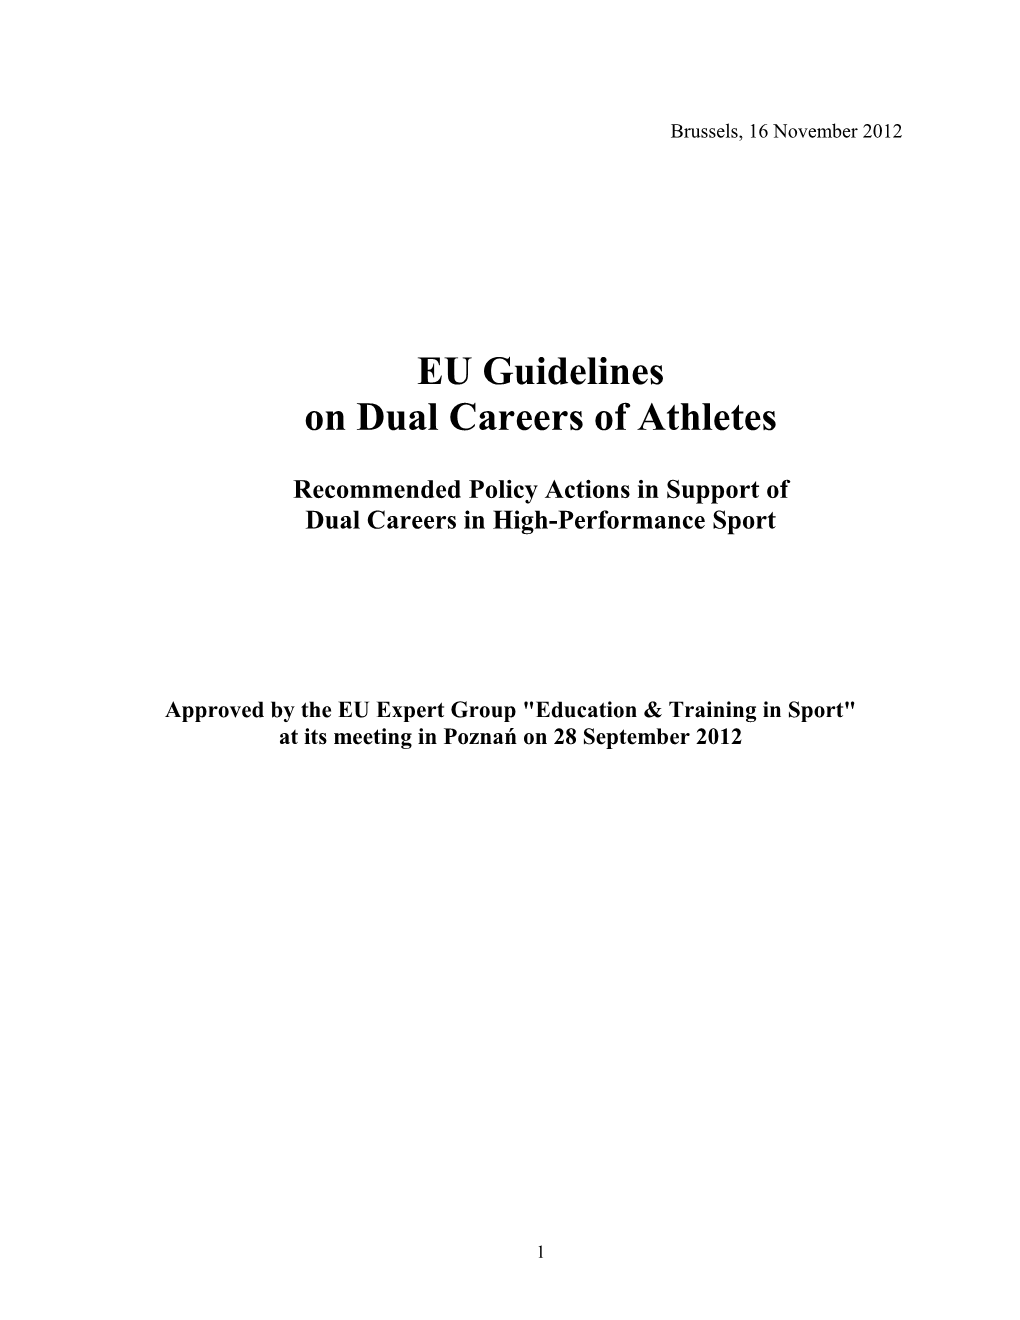 EU Guidelines on Dual Careers